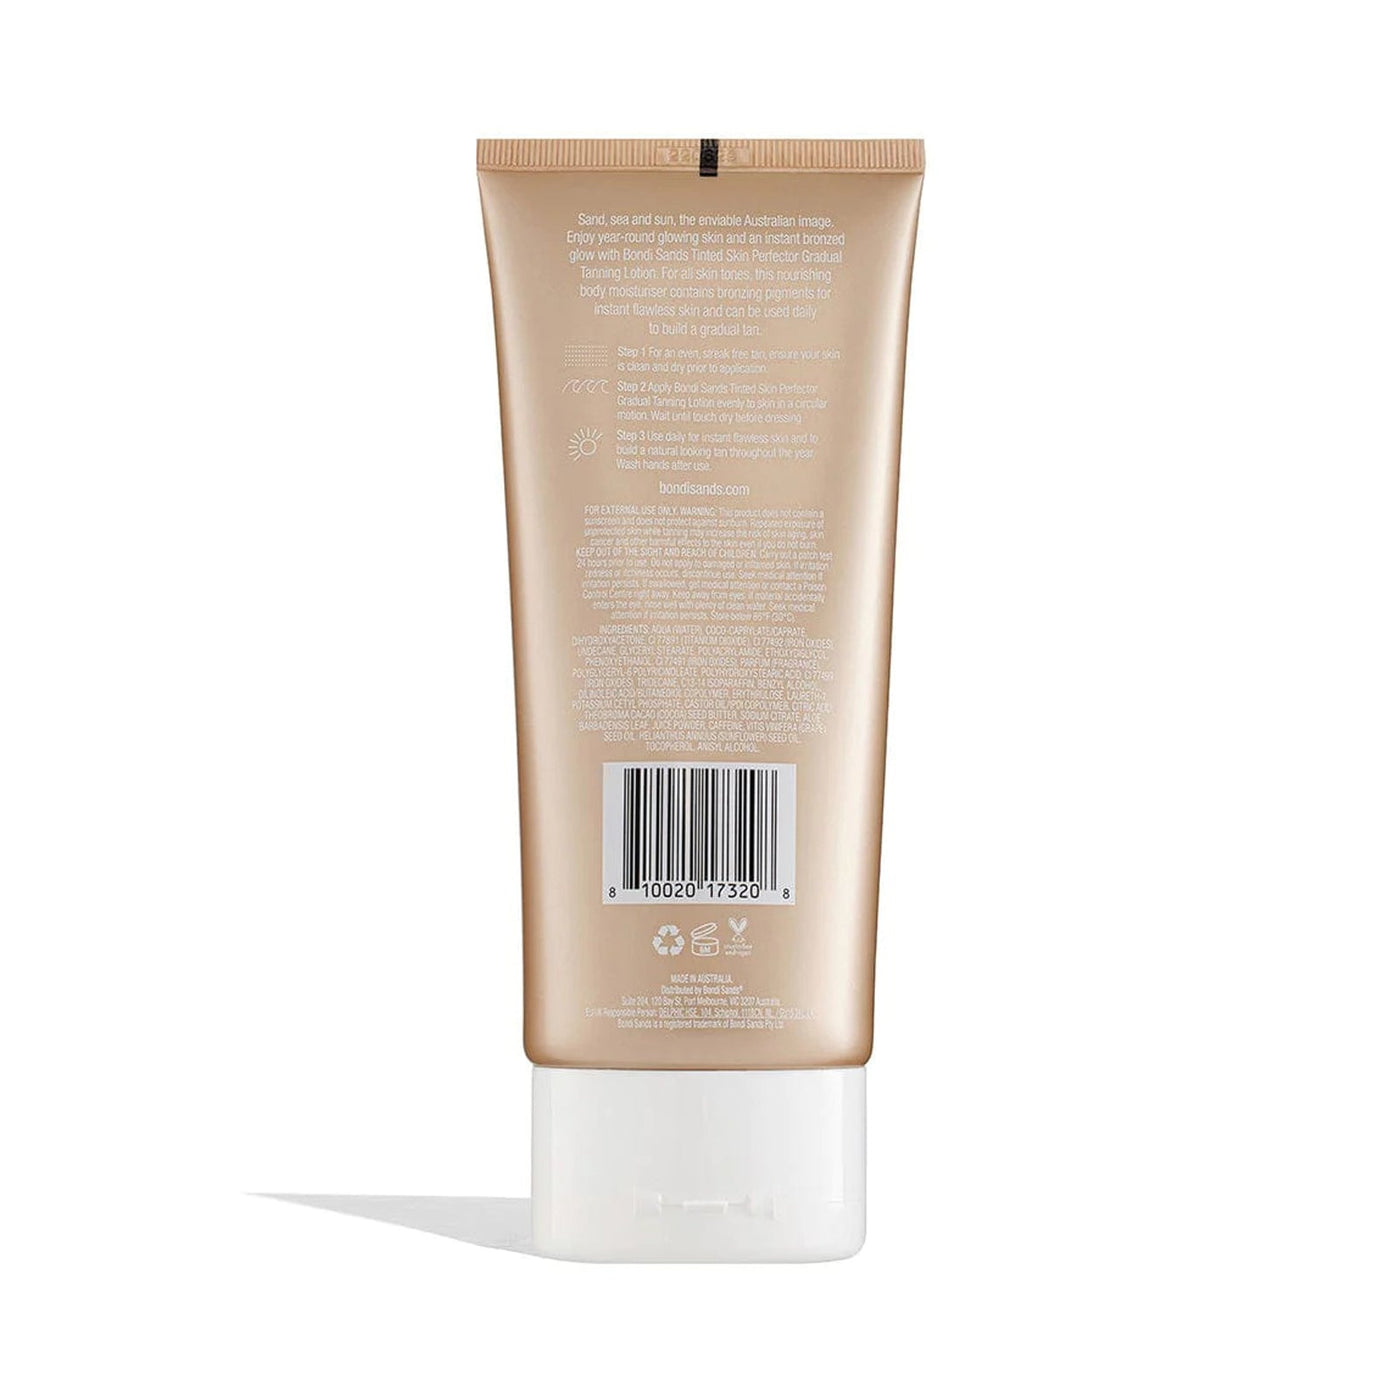 Bondi Sands Gradual Tanning Lotion Tinted Skin Perfector (150ml) back details